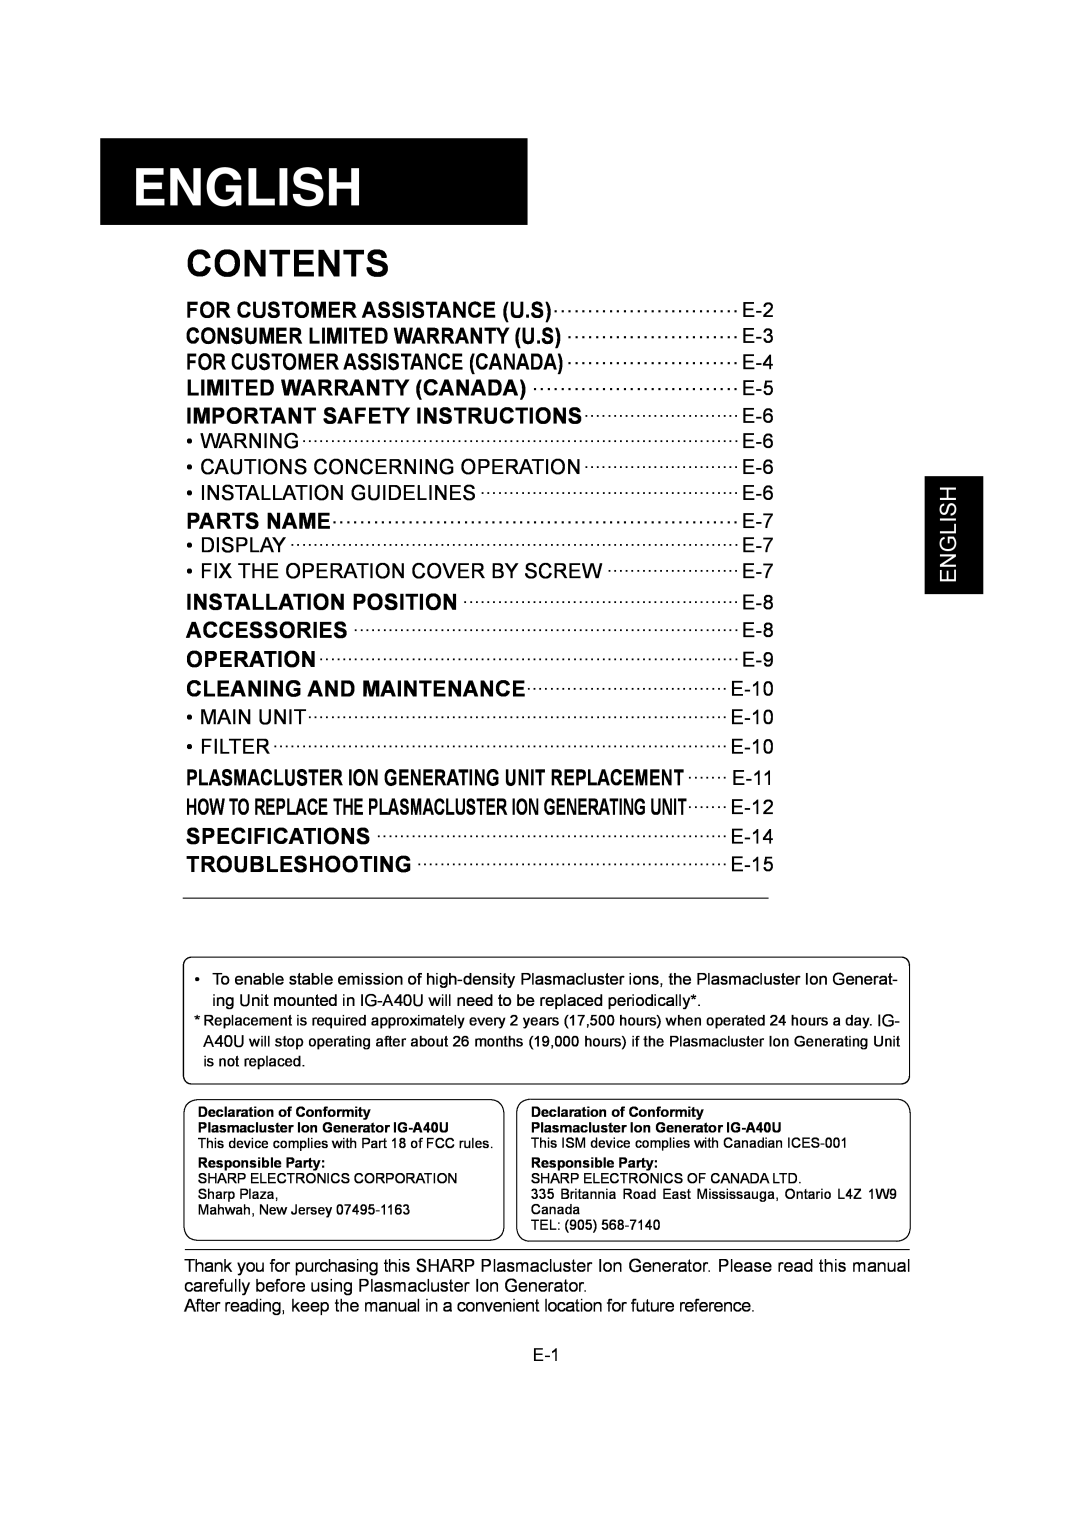 Sharp IG-A40U operation manual English, Contents 